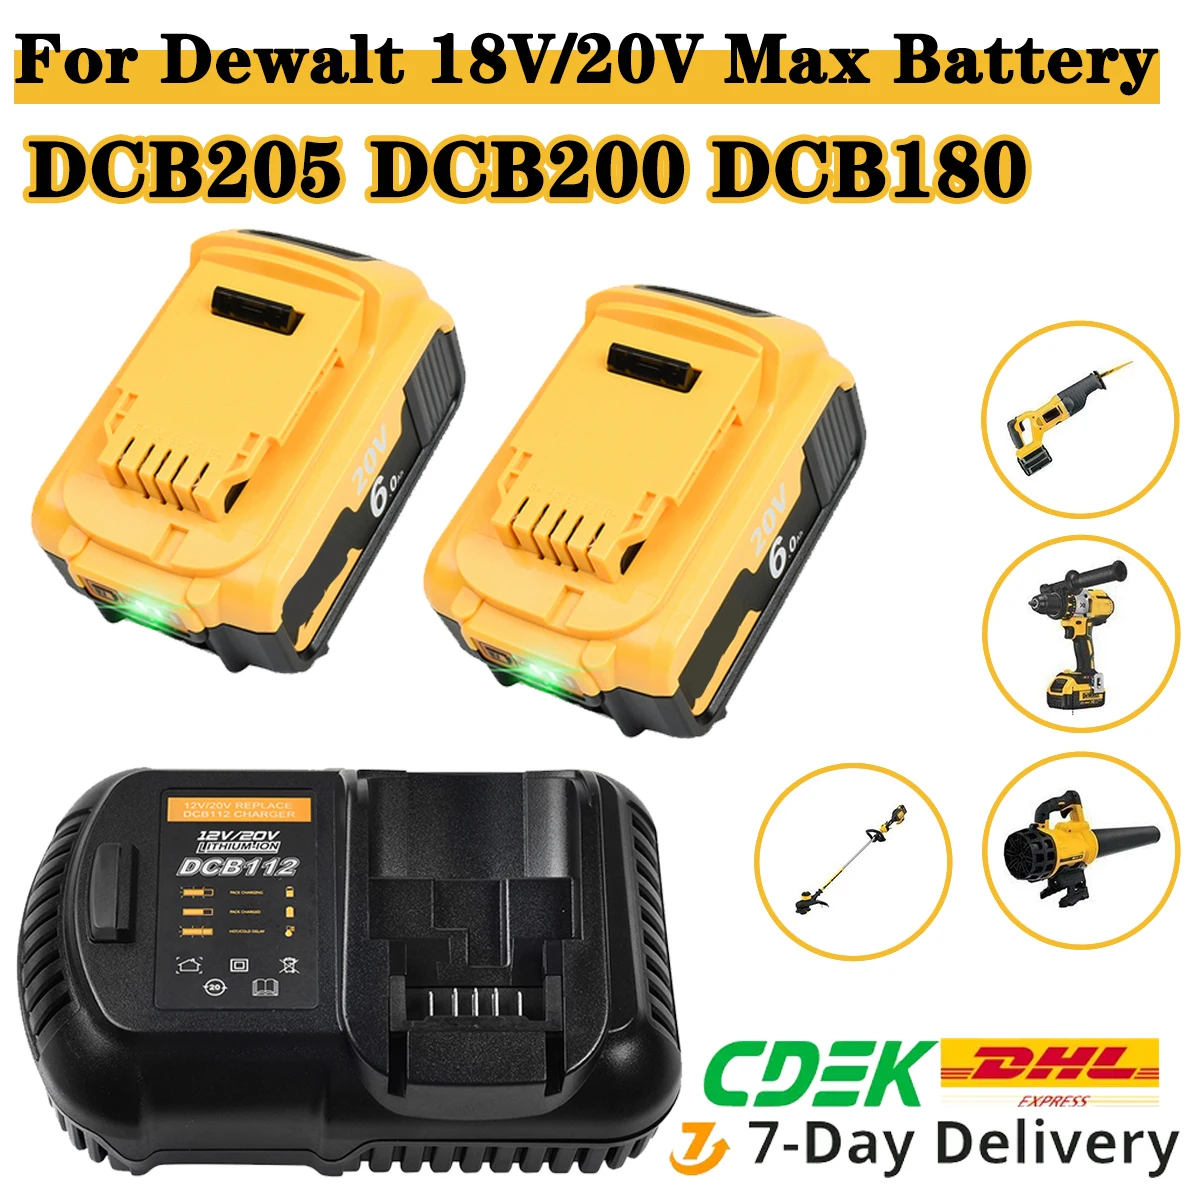 Negative Dewalt 20v Battery | Batteries Dewalt Power Tools - - Aliexpress